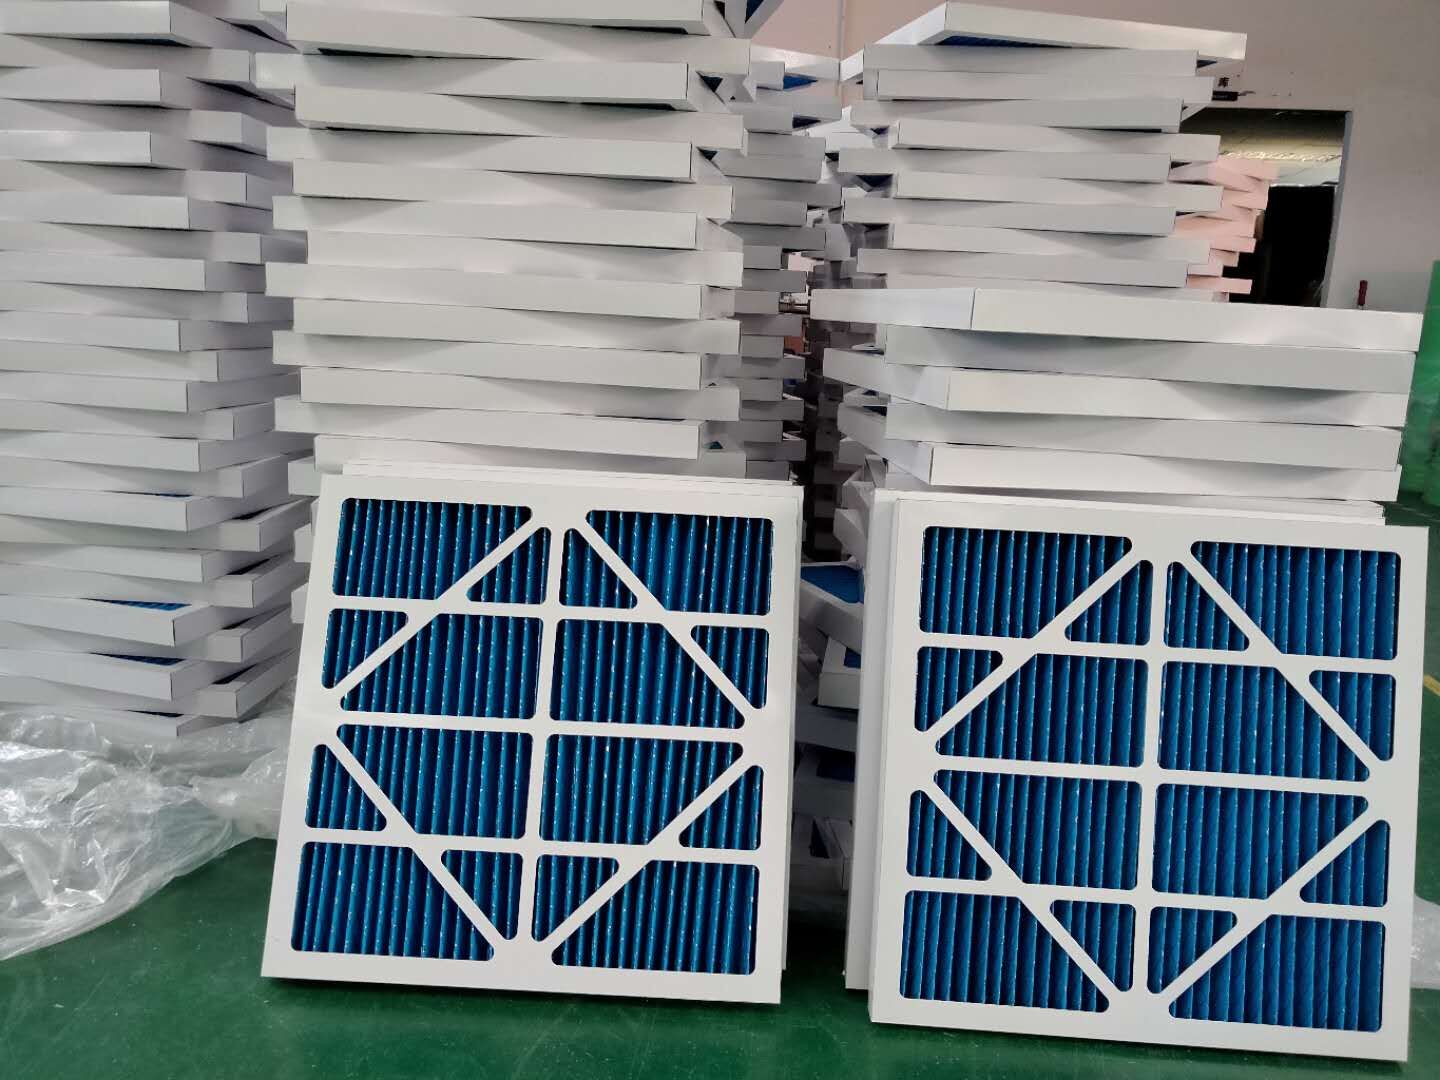 Merv8 Cardboard Pleated Pre Air Filter for AHU Unit